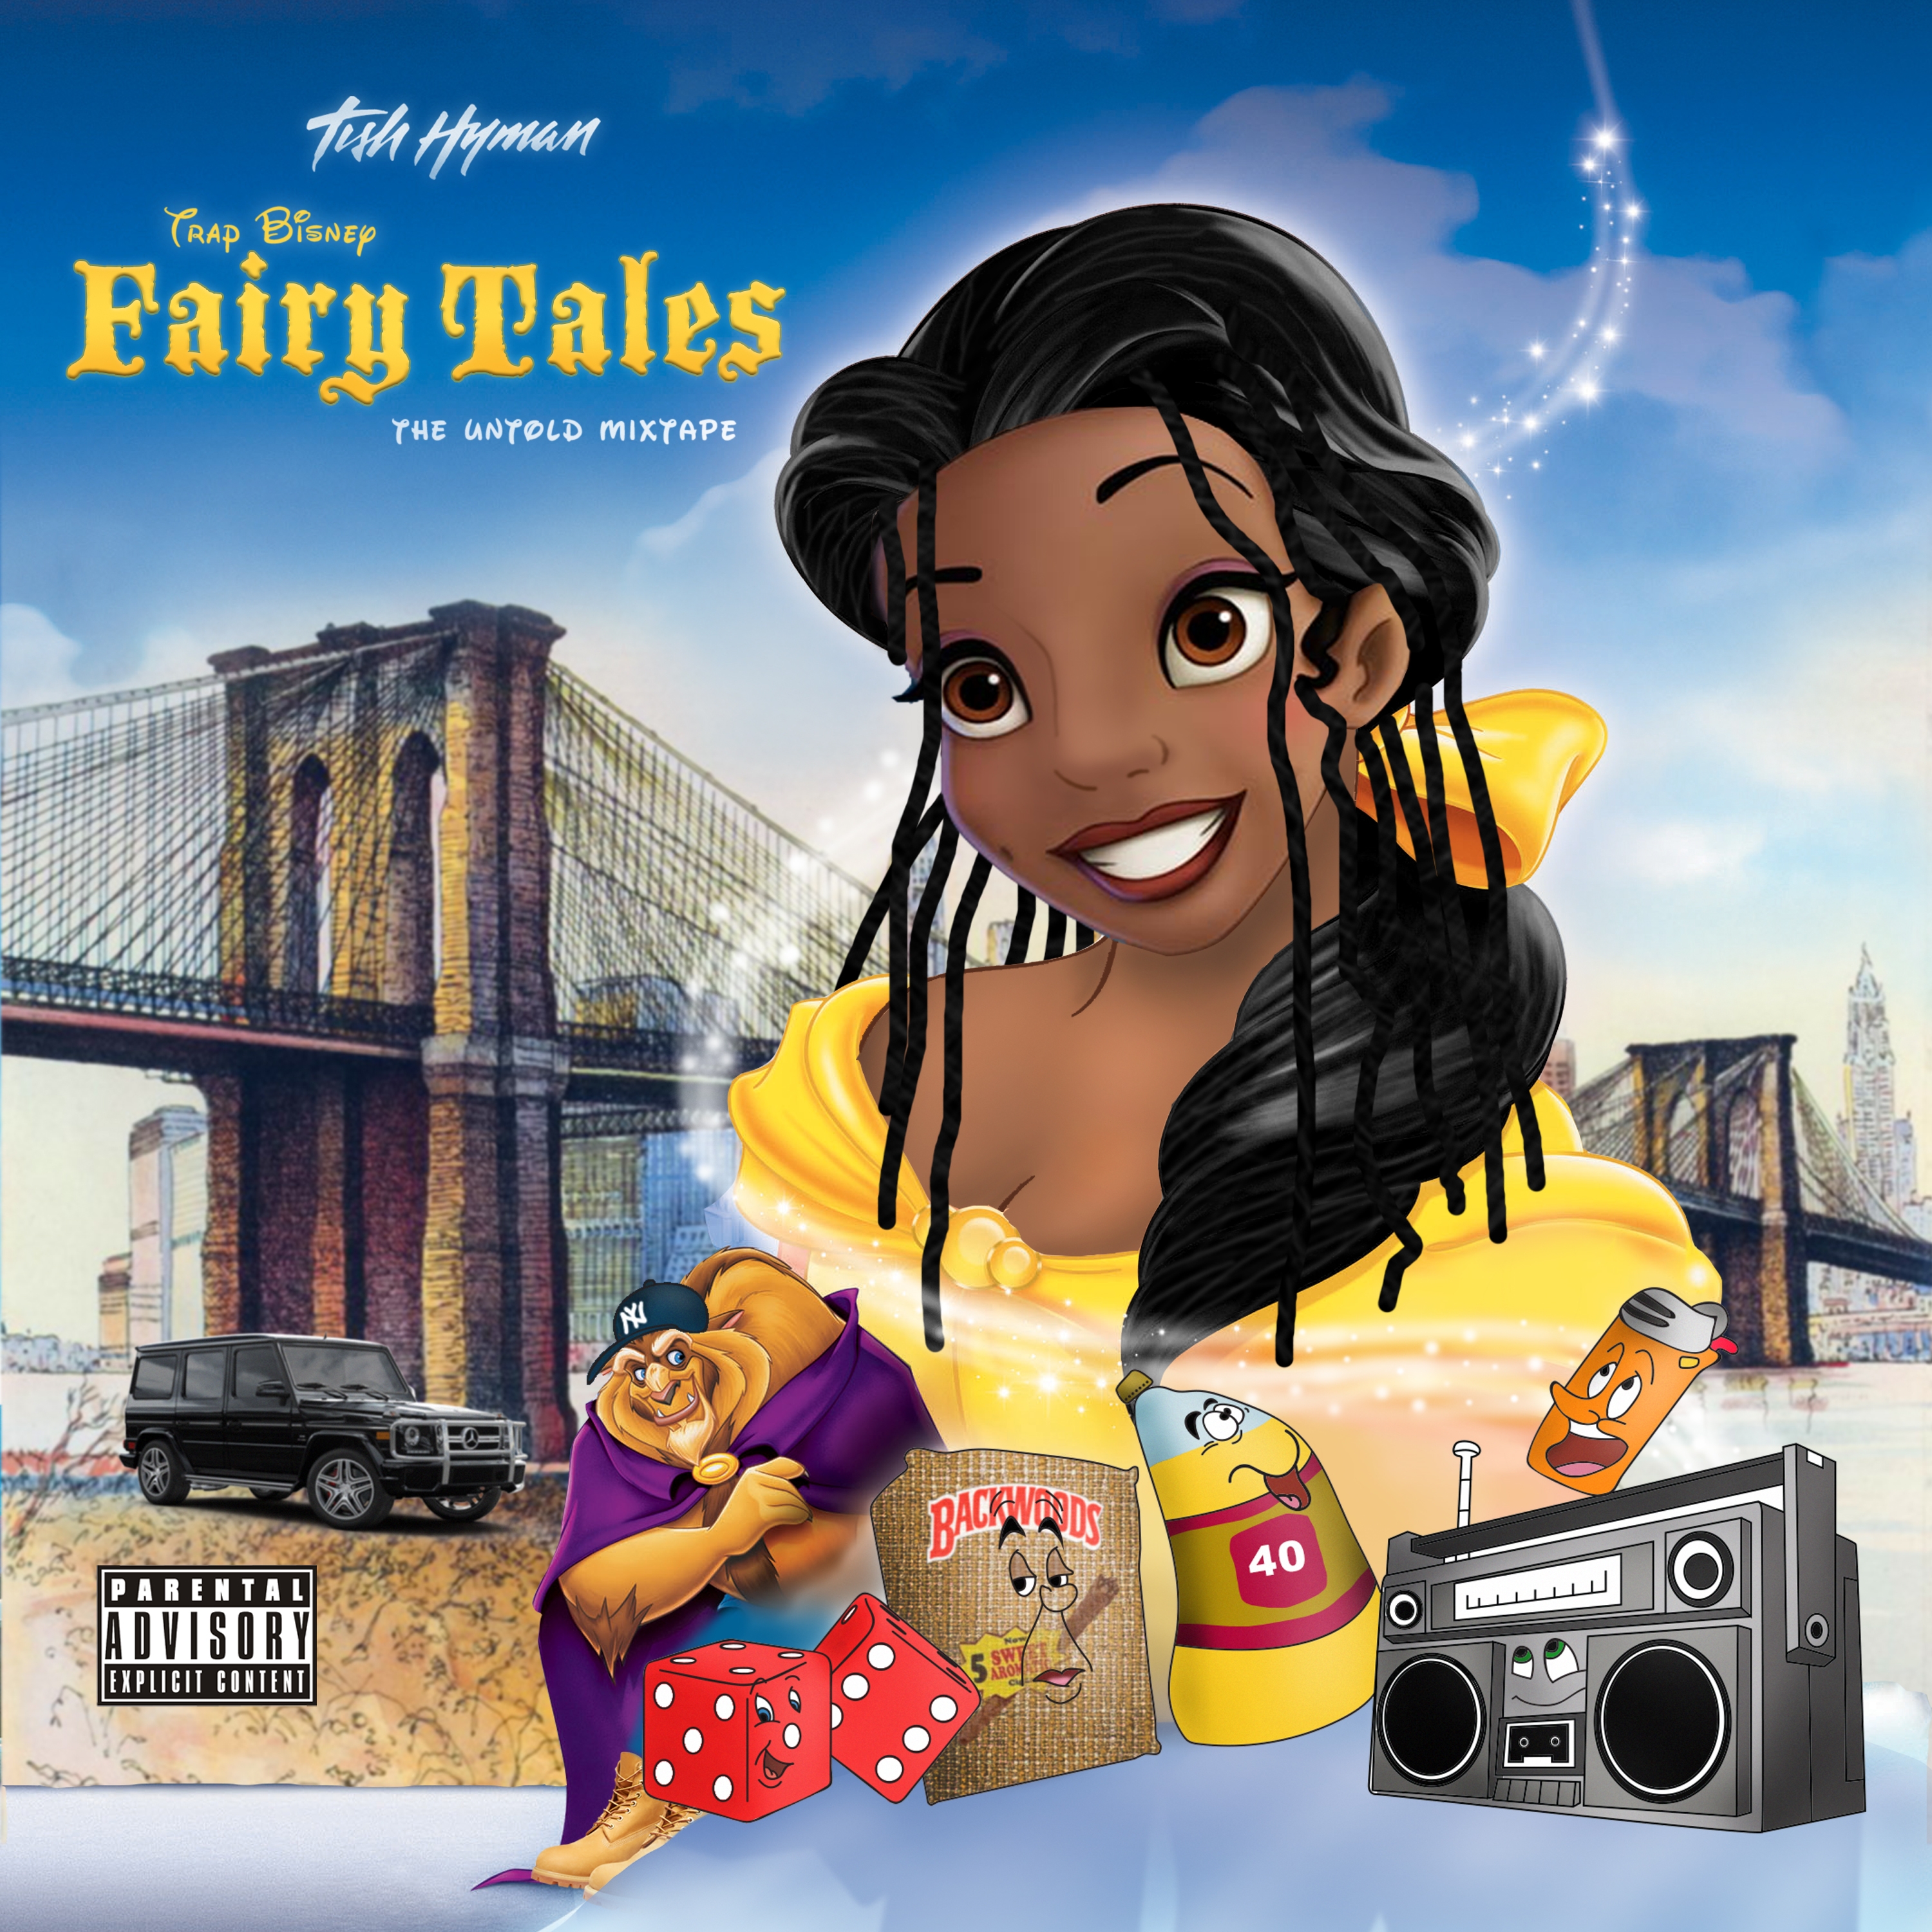 Trap Bisney Fairy Tales: The Untold Mixtape